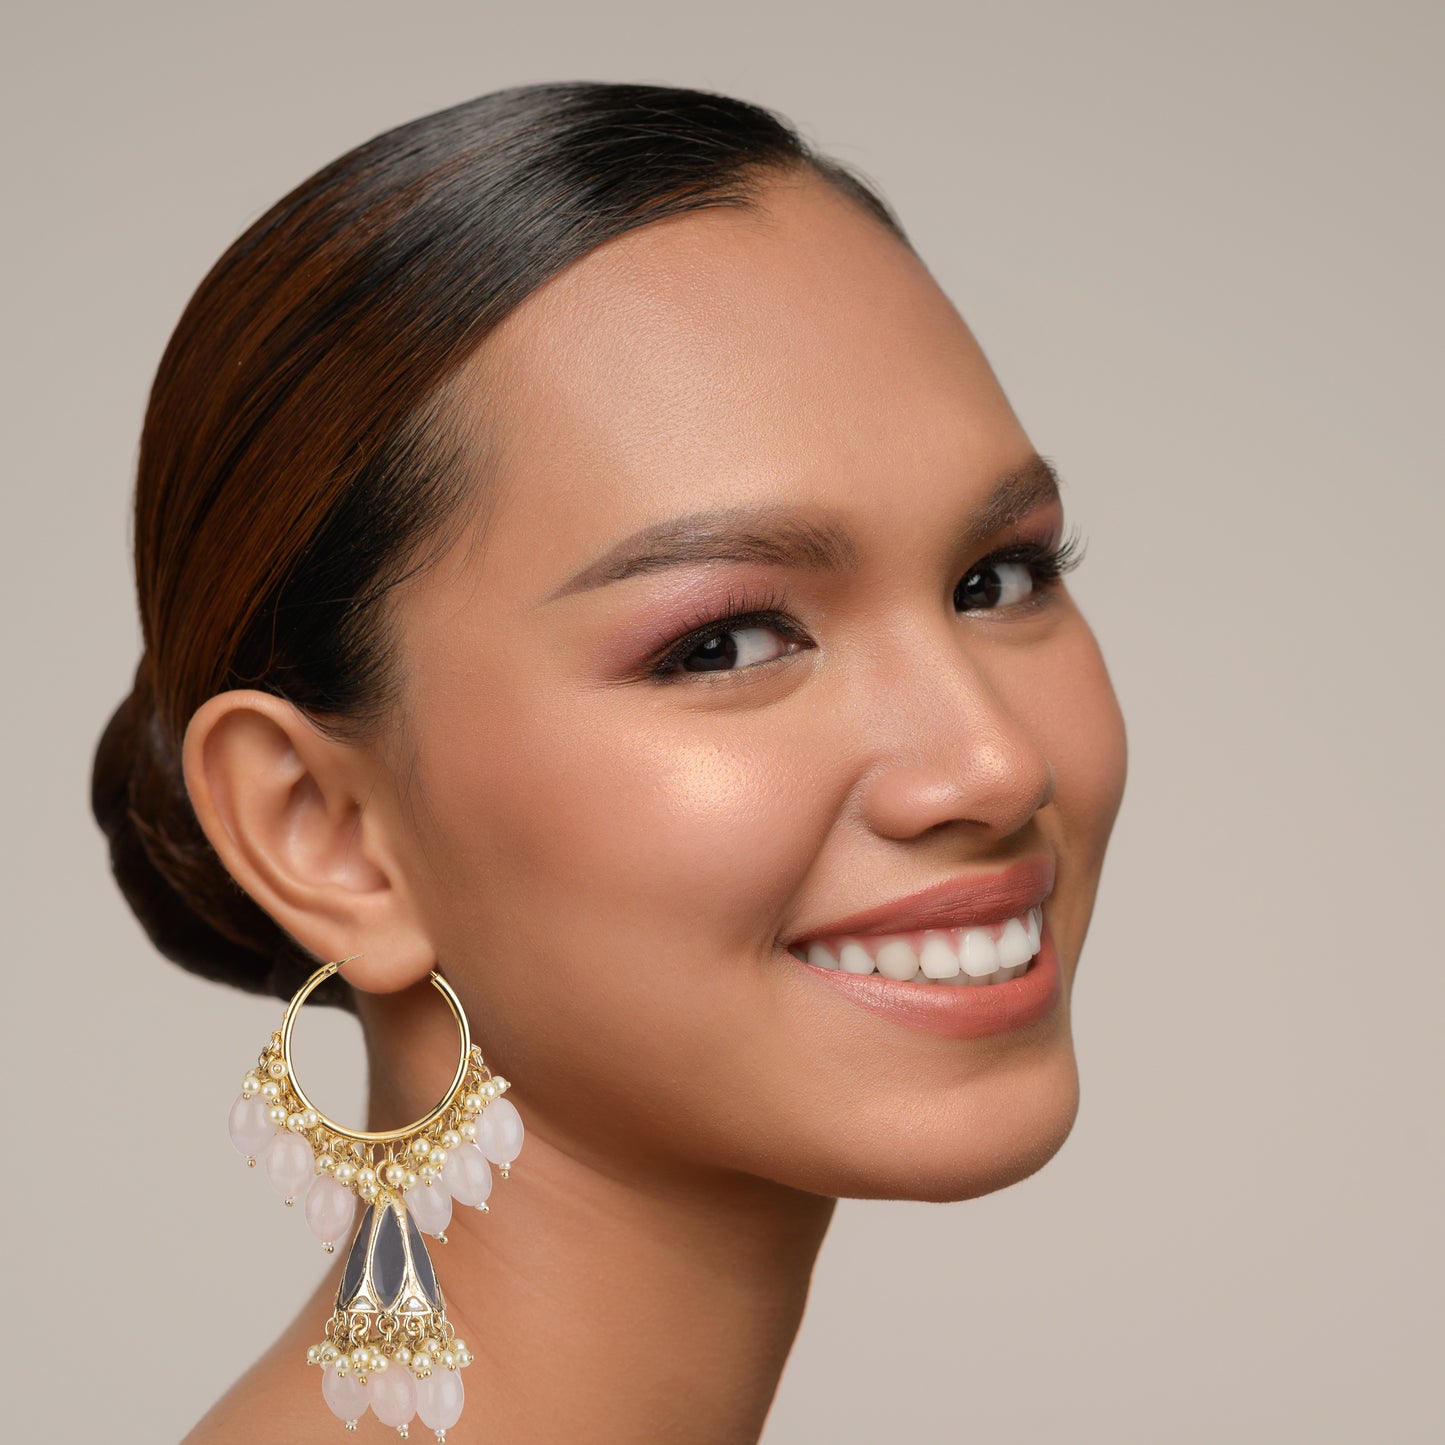 Bdiva 18K Gold Plated Rose Quartz Chandbali Hoops Earring with Semi Cultured Pearls.